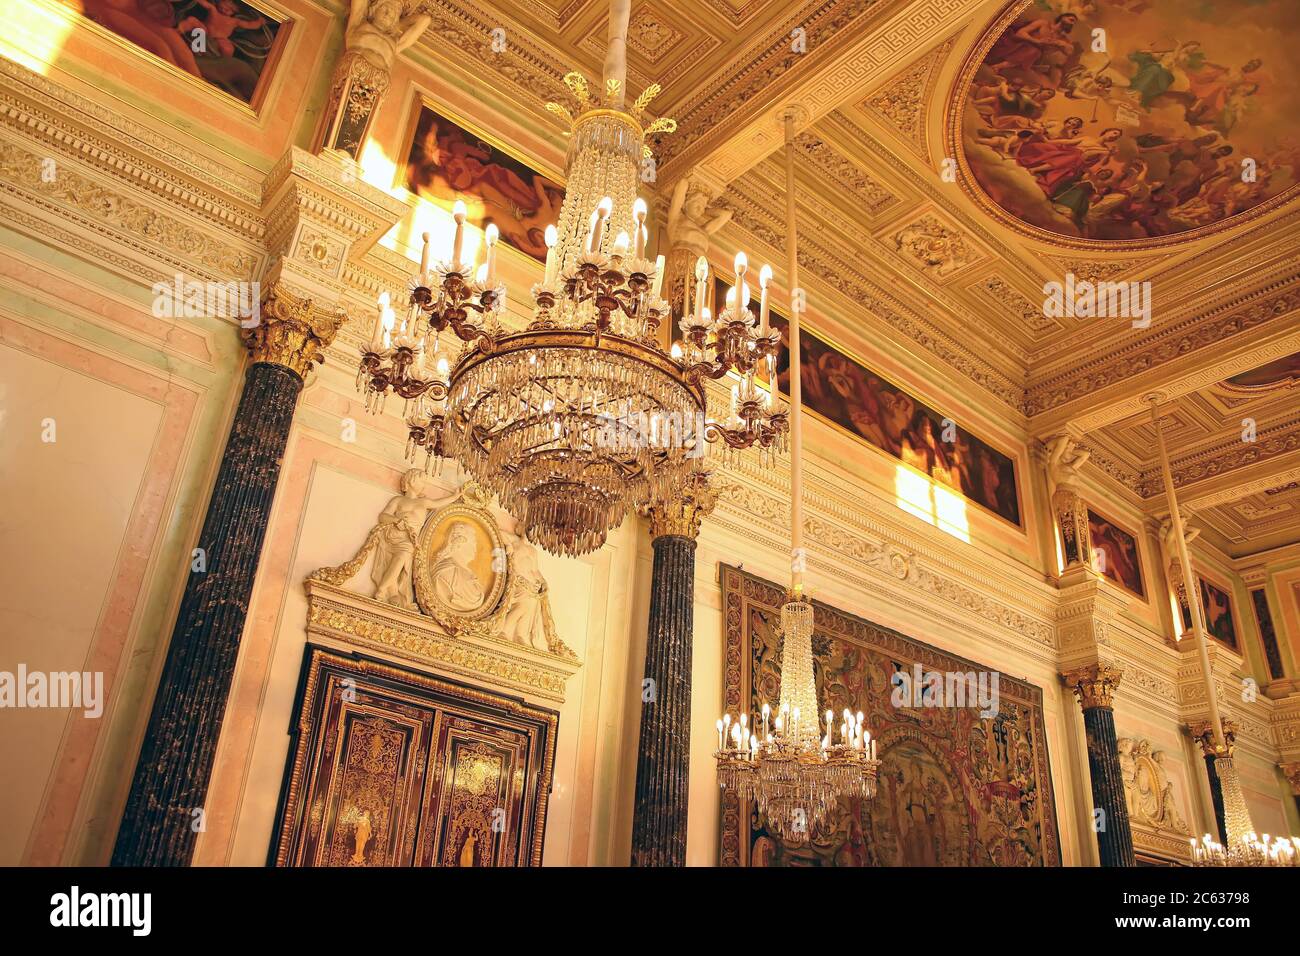 Beautiful Chandellier & ceilings in the Leonardo da Vinci Room, State Hermitage Museum, St Petersburg, Russia. Stock Photo